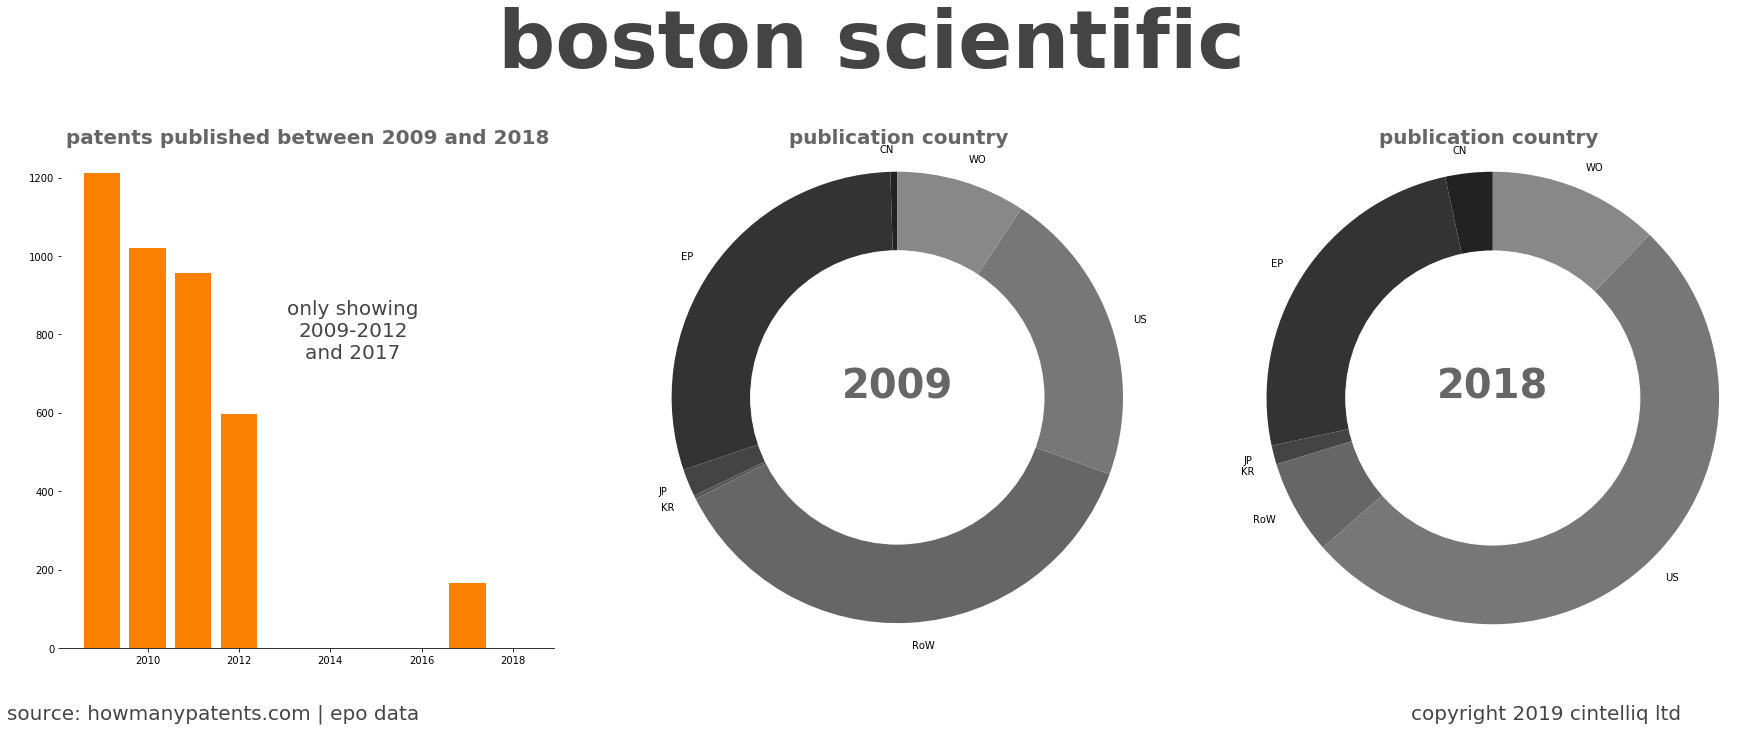 summary of patents for Boston Scientific